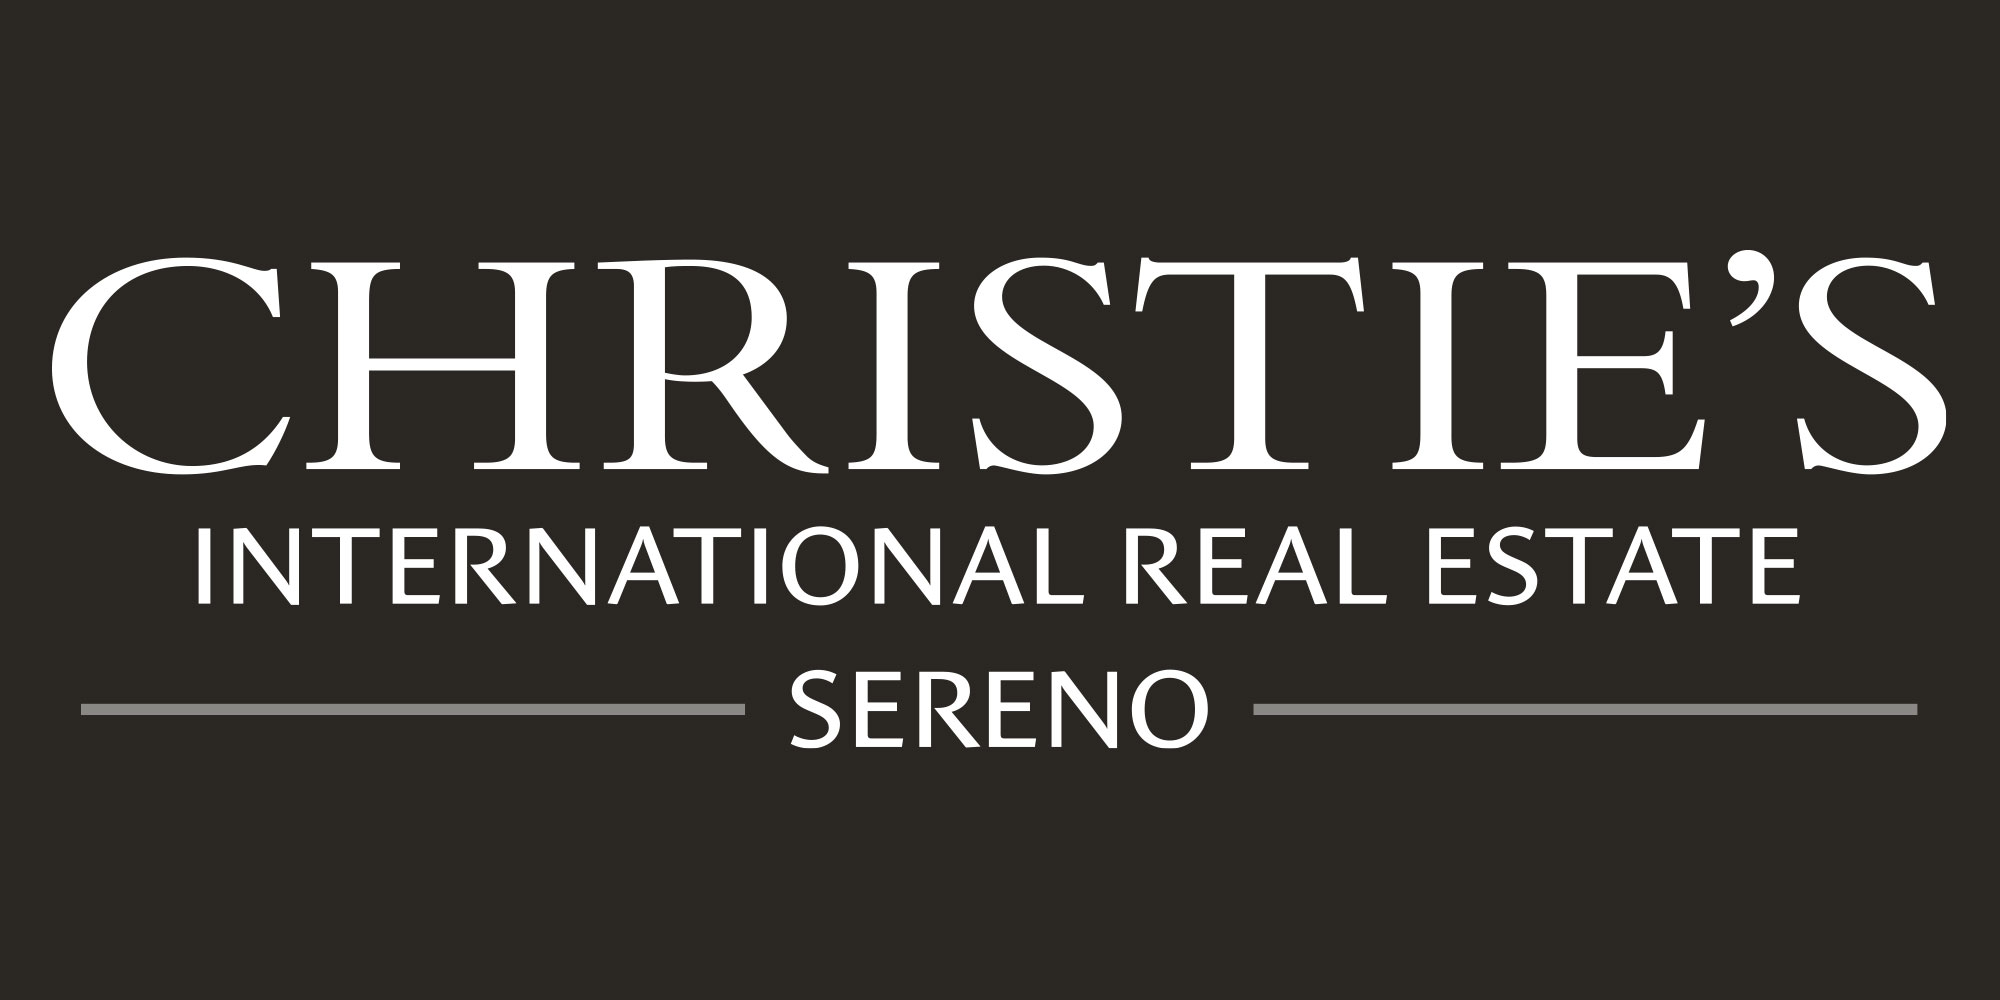 Christie’s International Real Estate Sereno